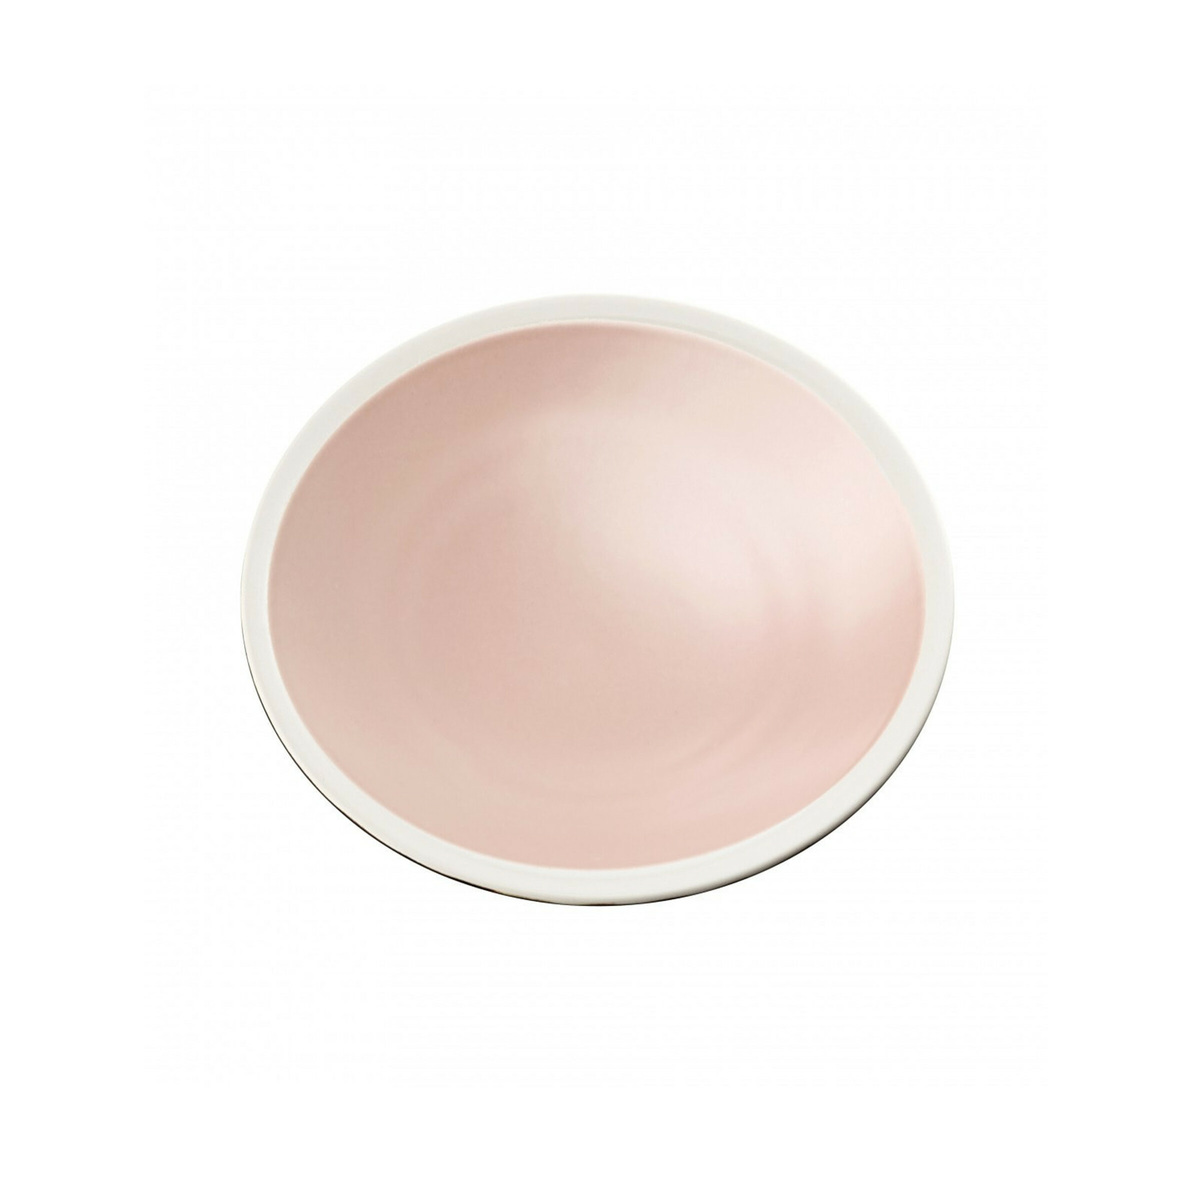 Dinner Plate Sicilia, Baby Pink - ø26 cm - Ceramic - image 1